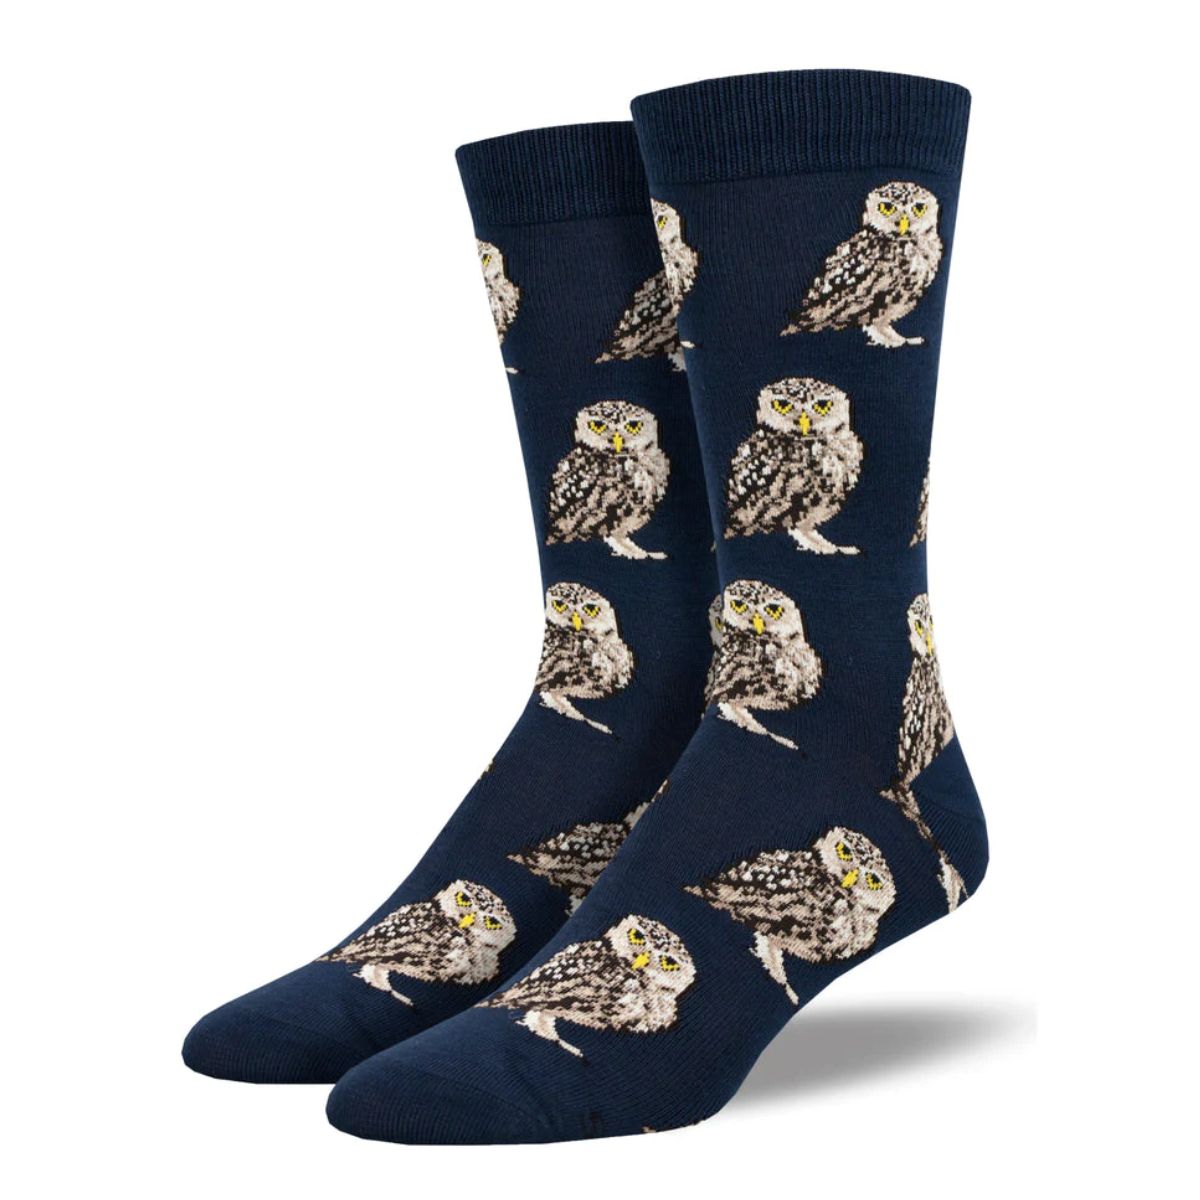 burrowing owls socks a pair of navy blue crew socks with owl print